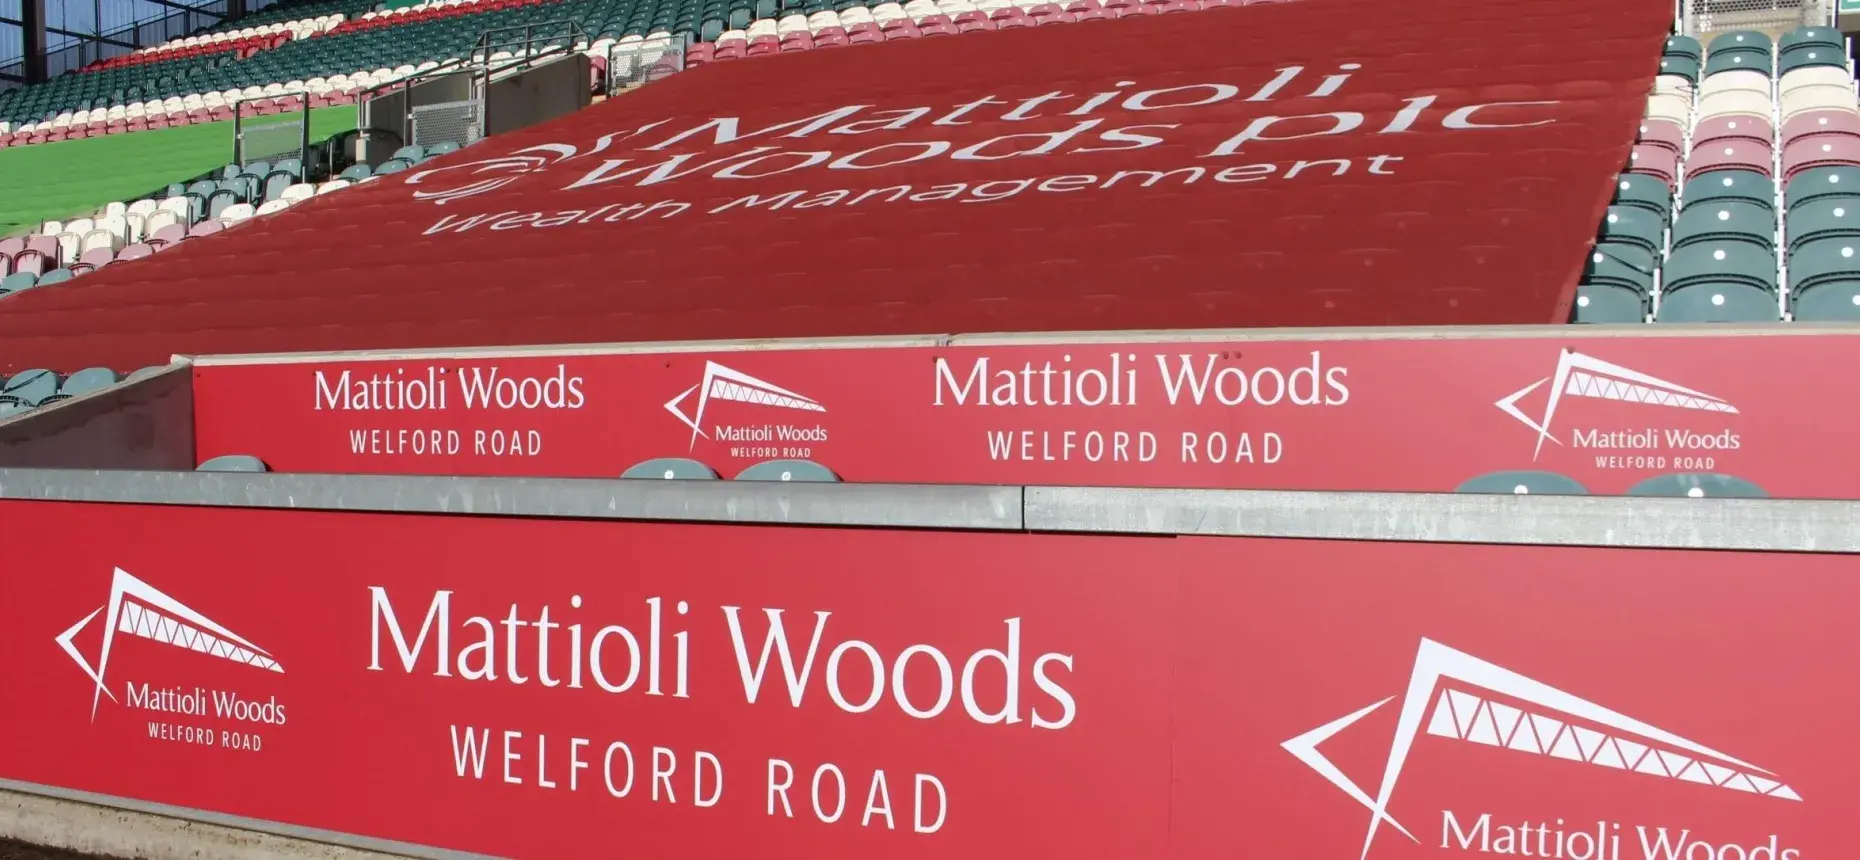 mattioli woods welford road branded stalls